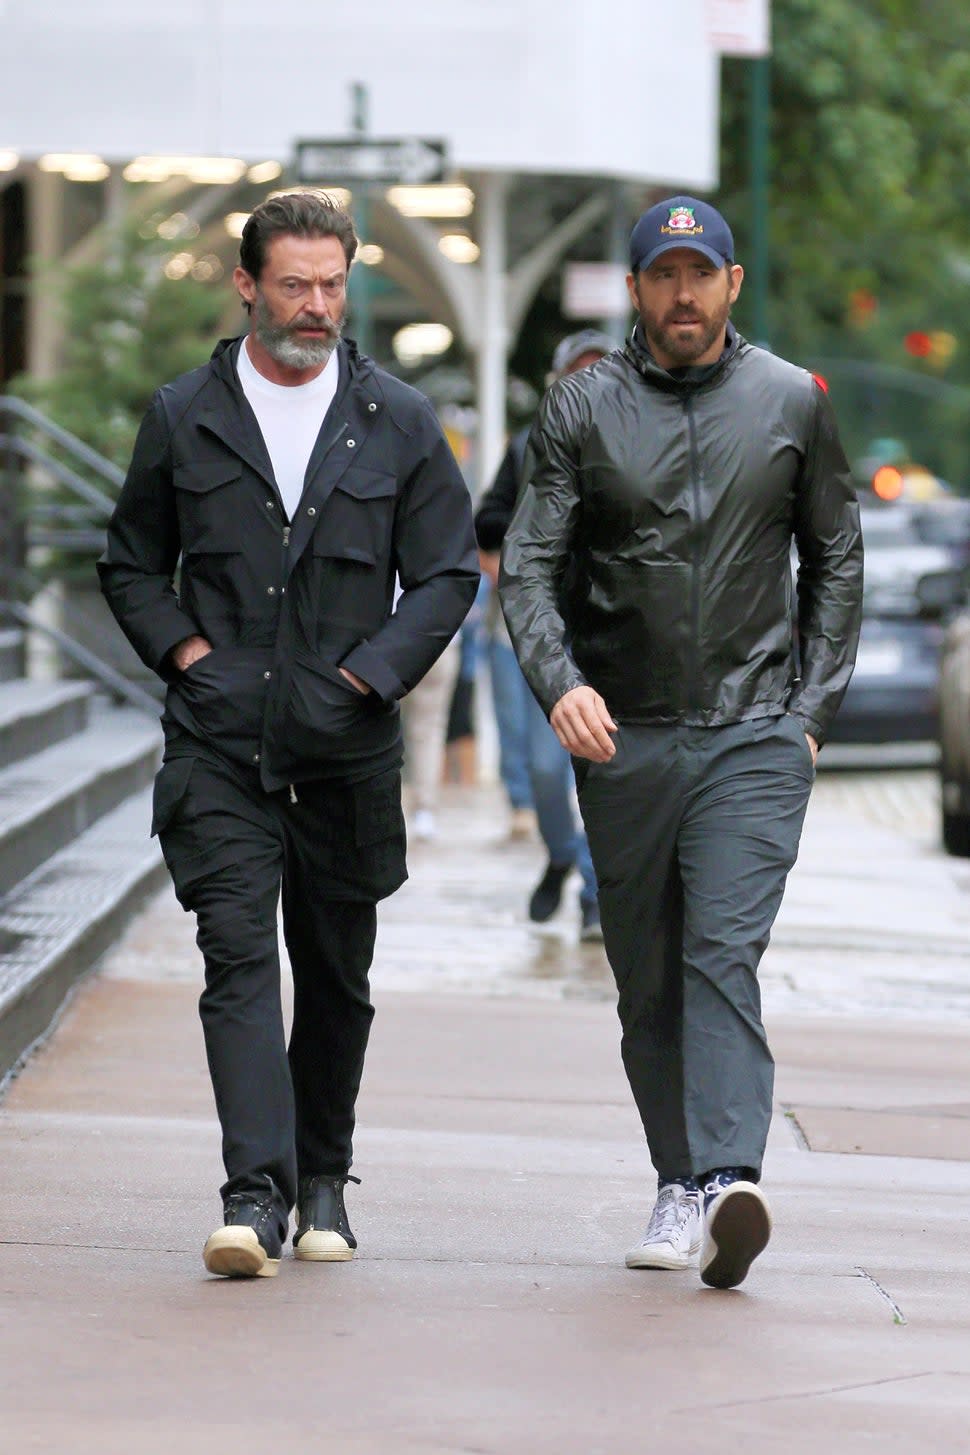 Hugh Jackman Takes Walk With Ryan Reynolds After Deborra Lee Furness Split News 